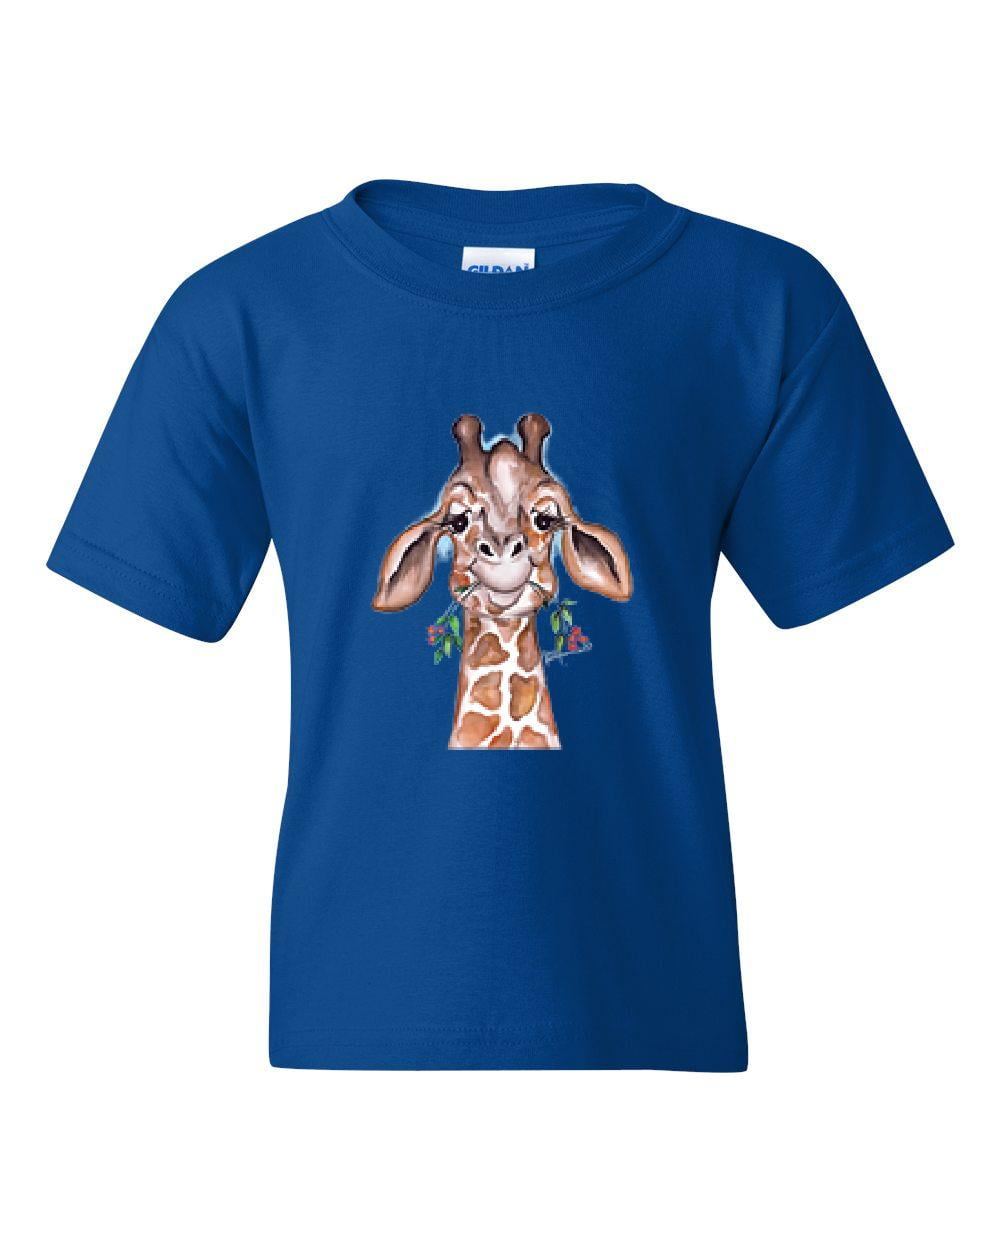 Girls Kids T-shirt Giraffe Fruit of The Loom Tops & Shirts 